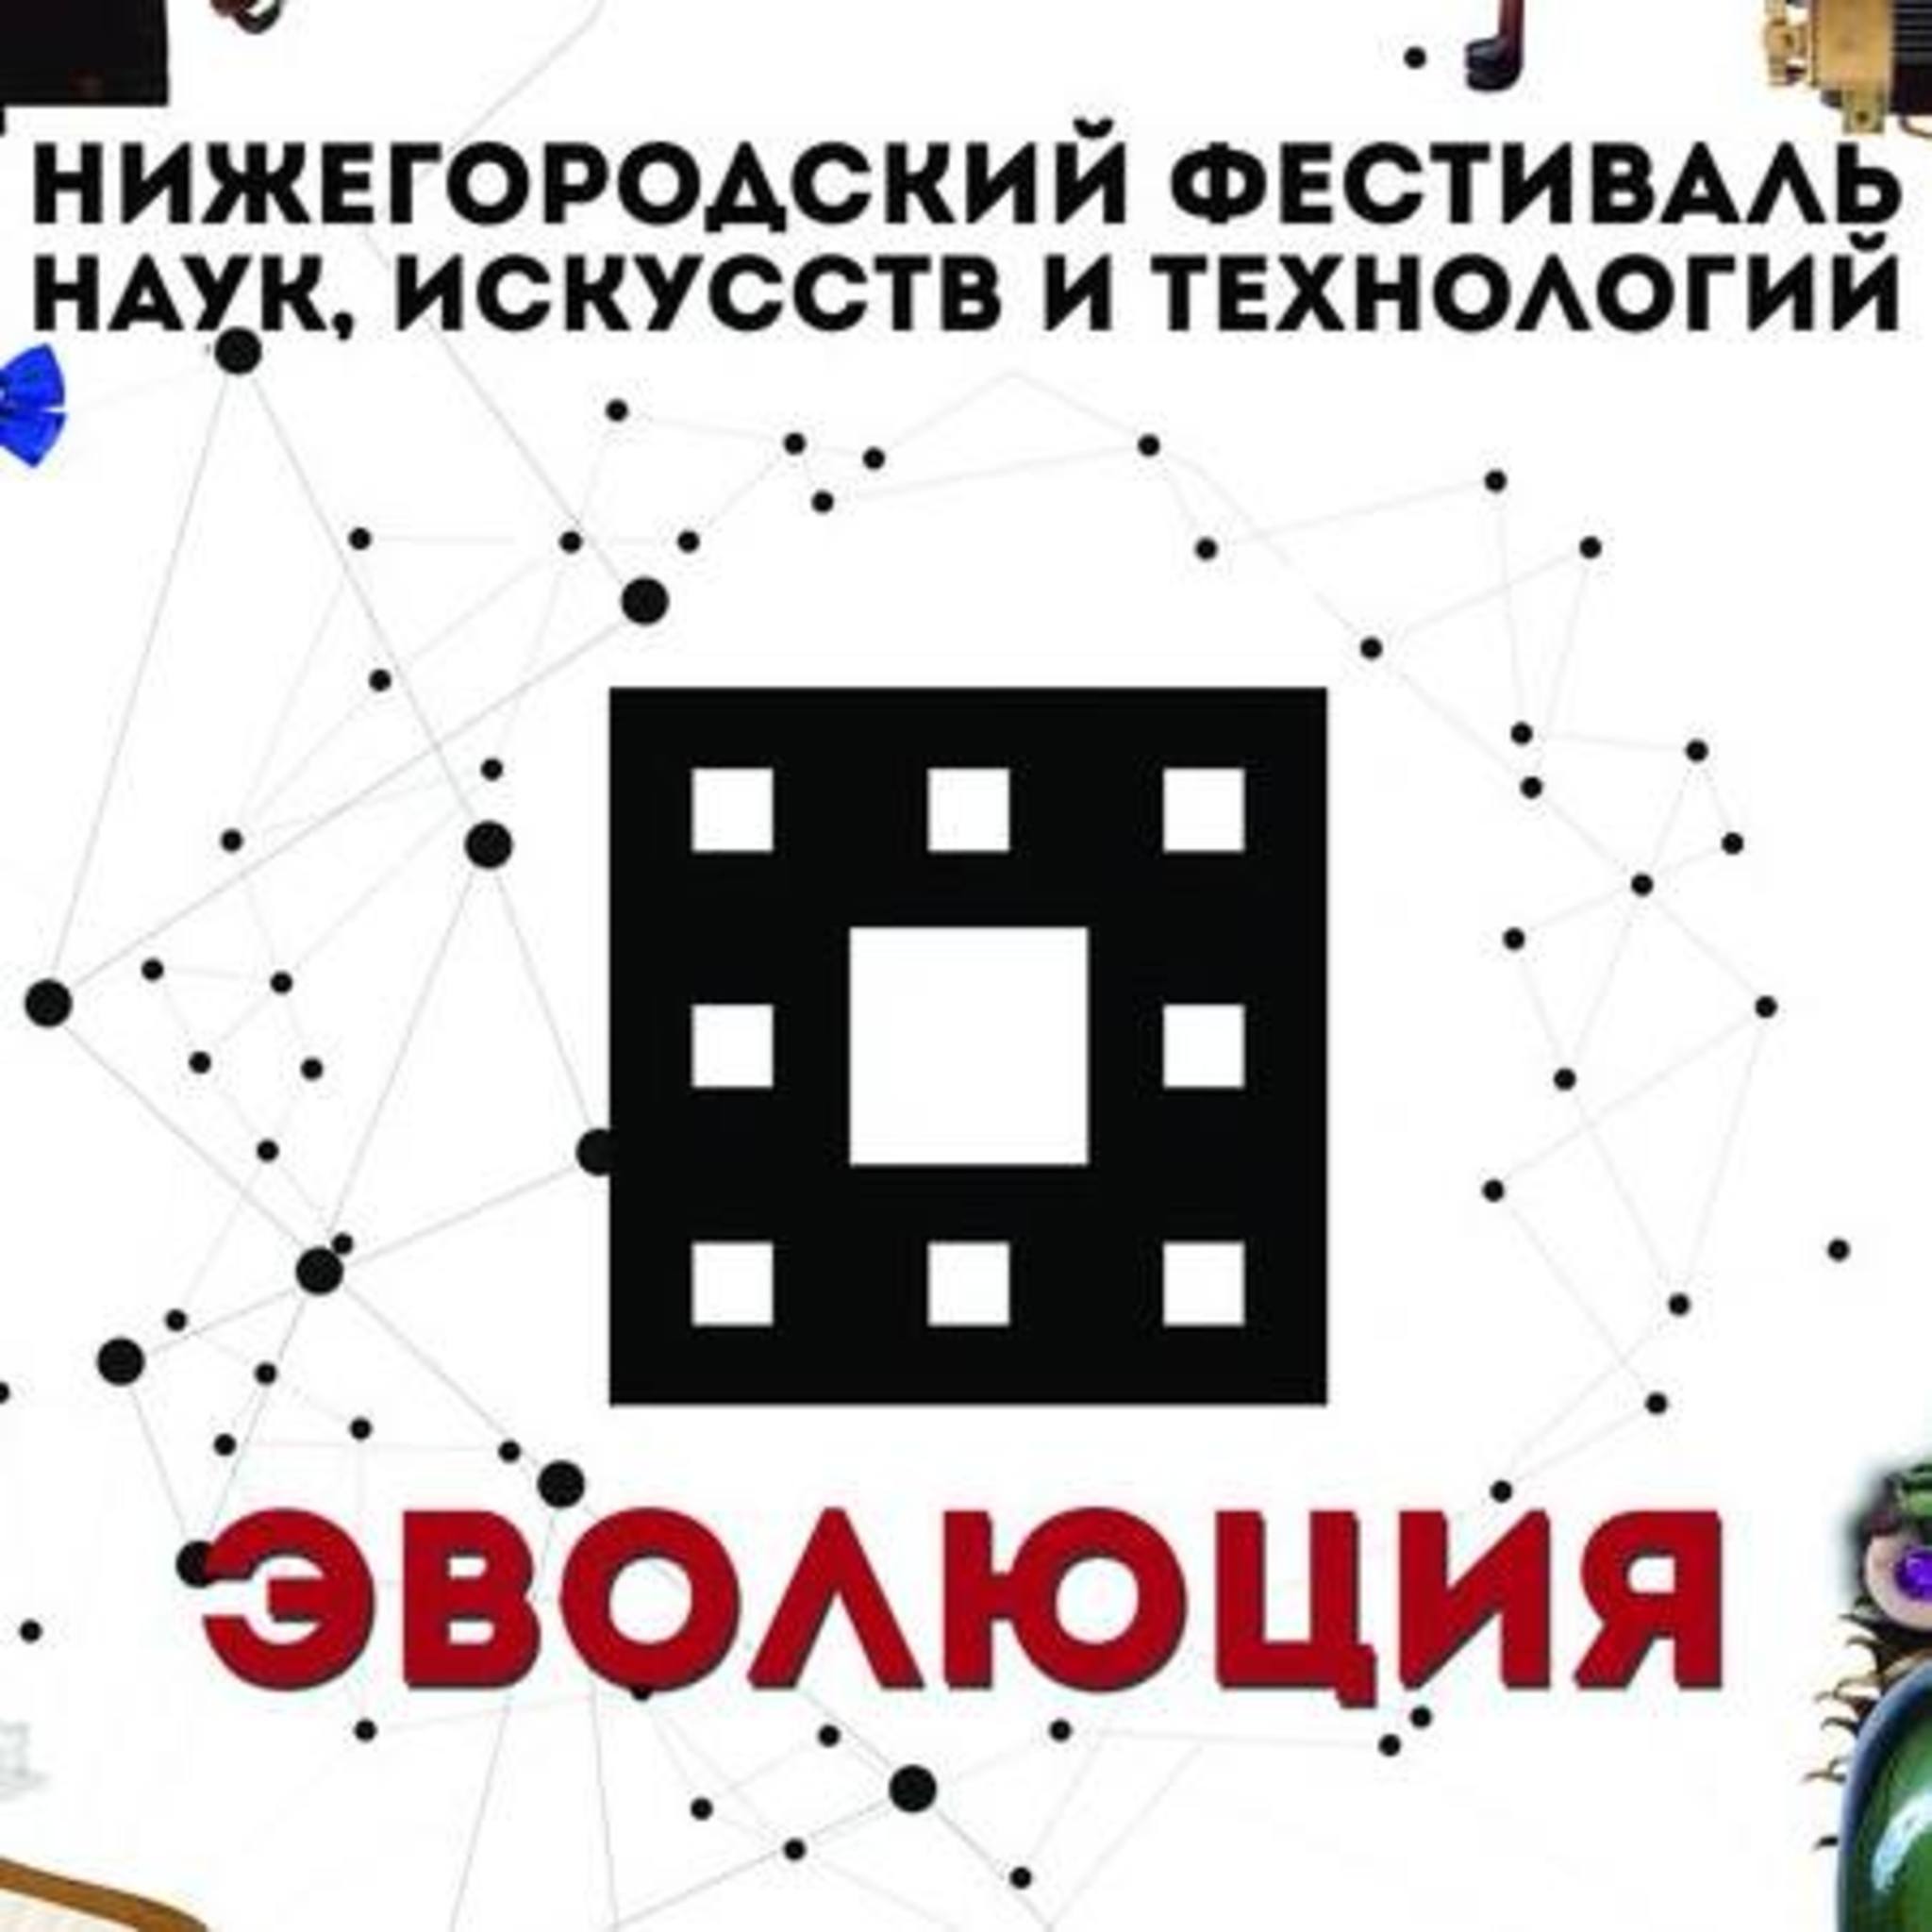 7th Nizhny Novgorod Festival of Arts, Sciences and Technologies Evolution